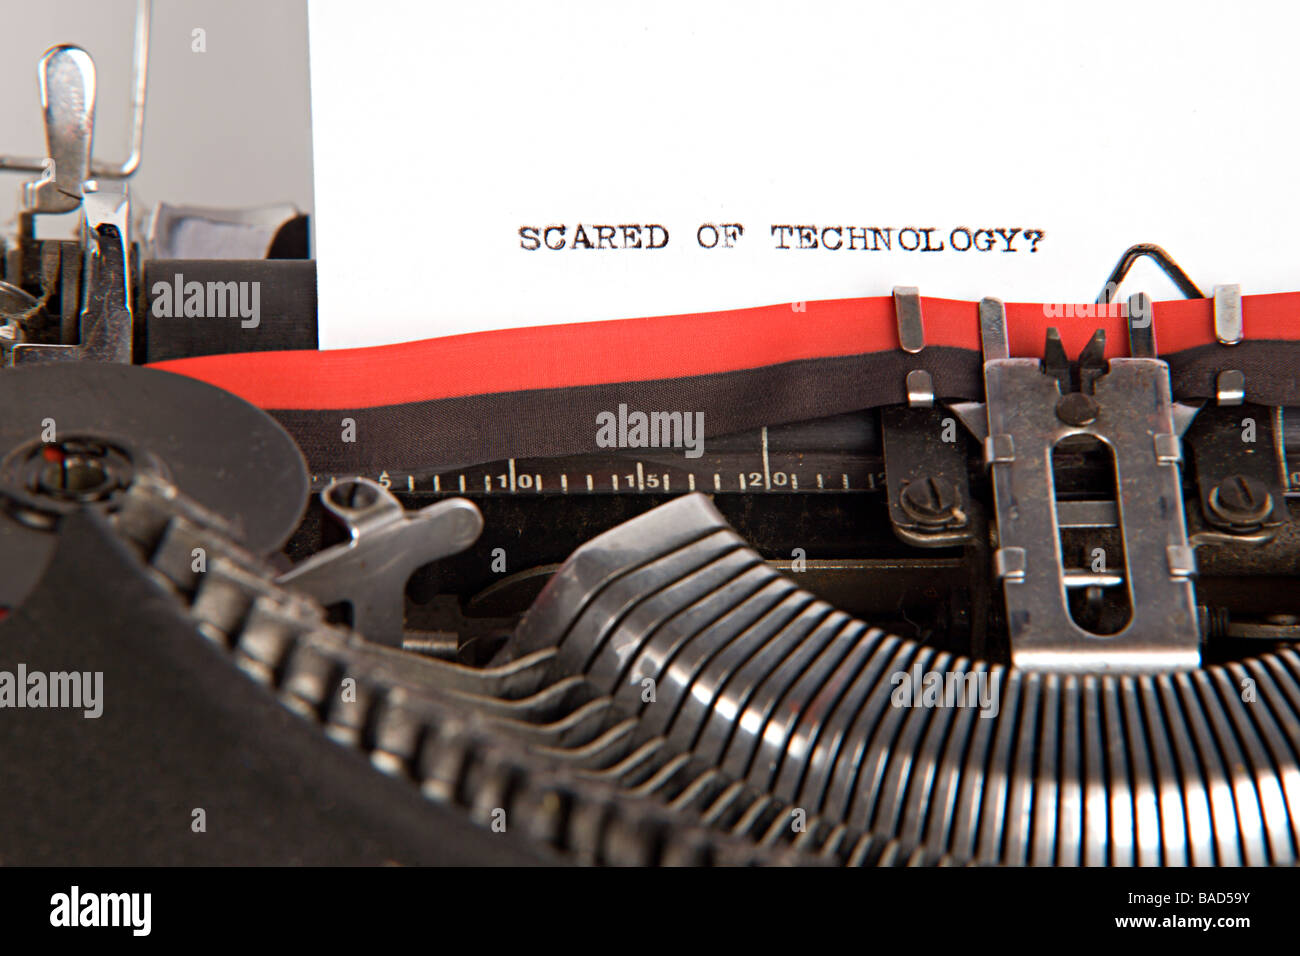 'Scared of technology' written on 1940's typewriter Stock Photo